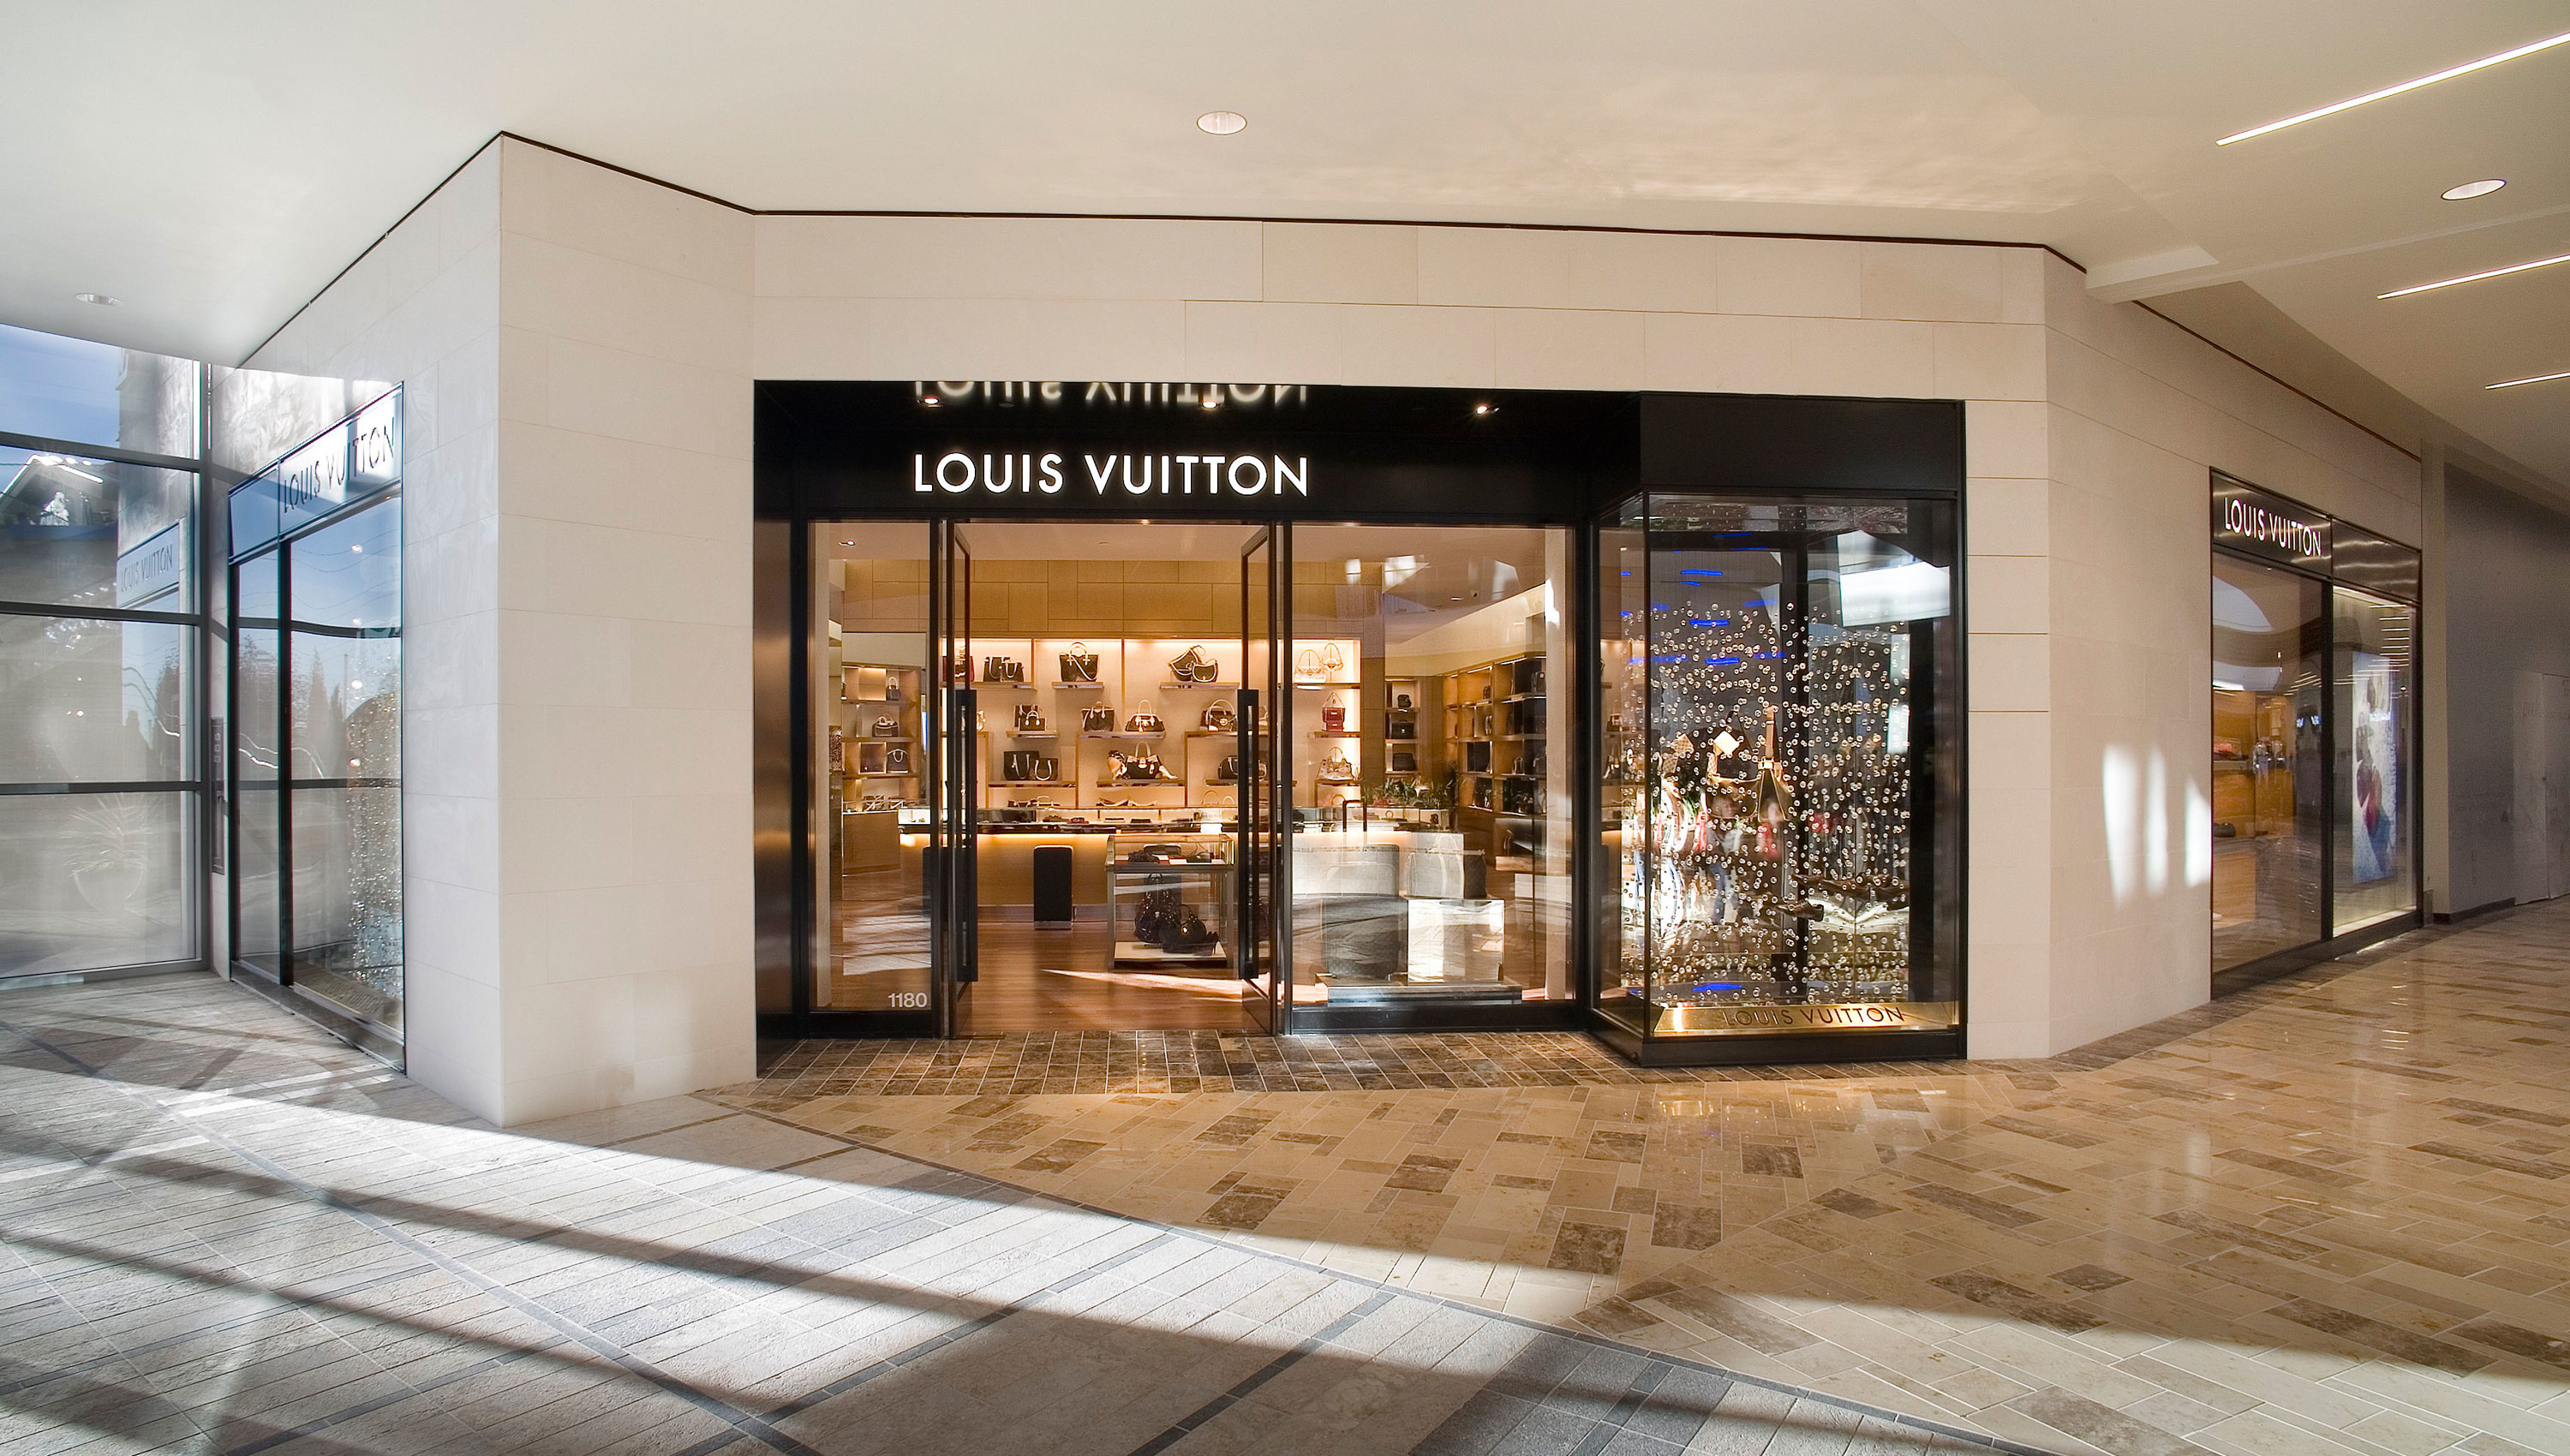 Louis Vuitton Roseville Sacramento Coupons near me in Roseville, CA 95678 | 8coupons